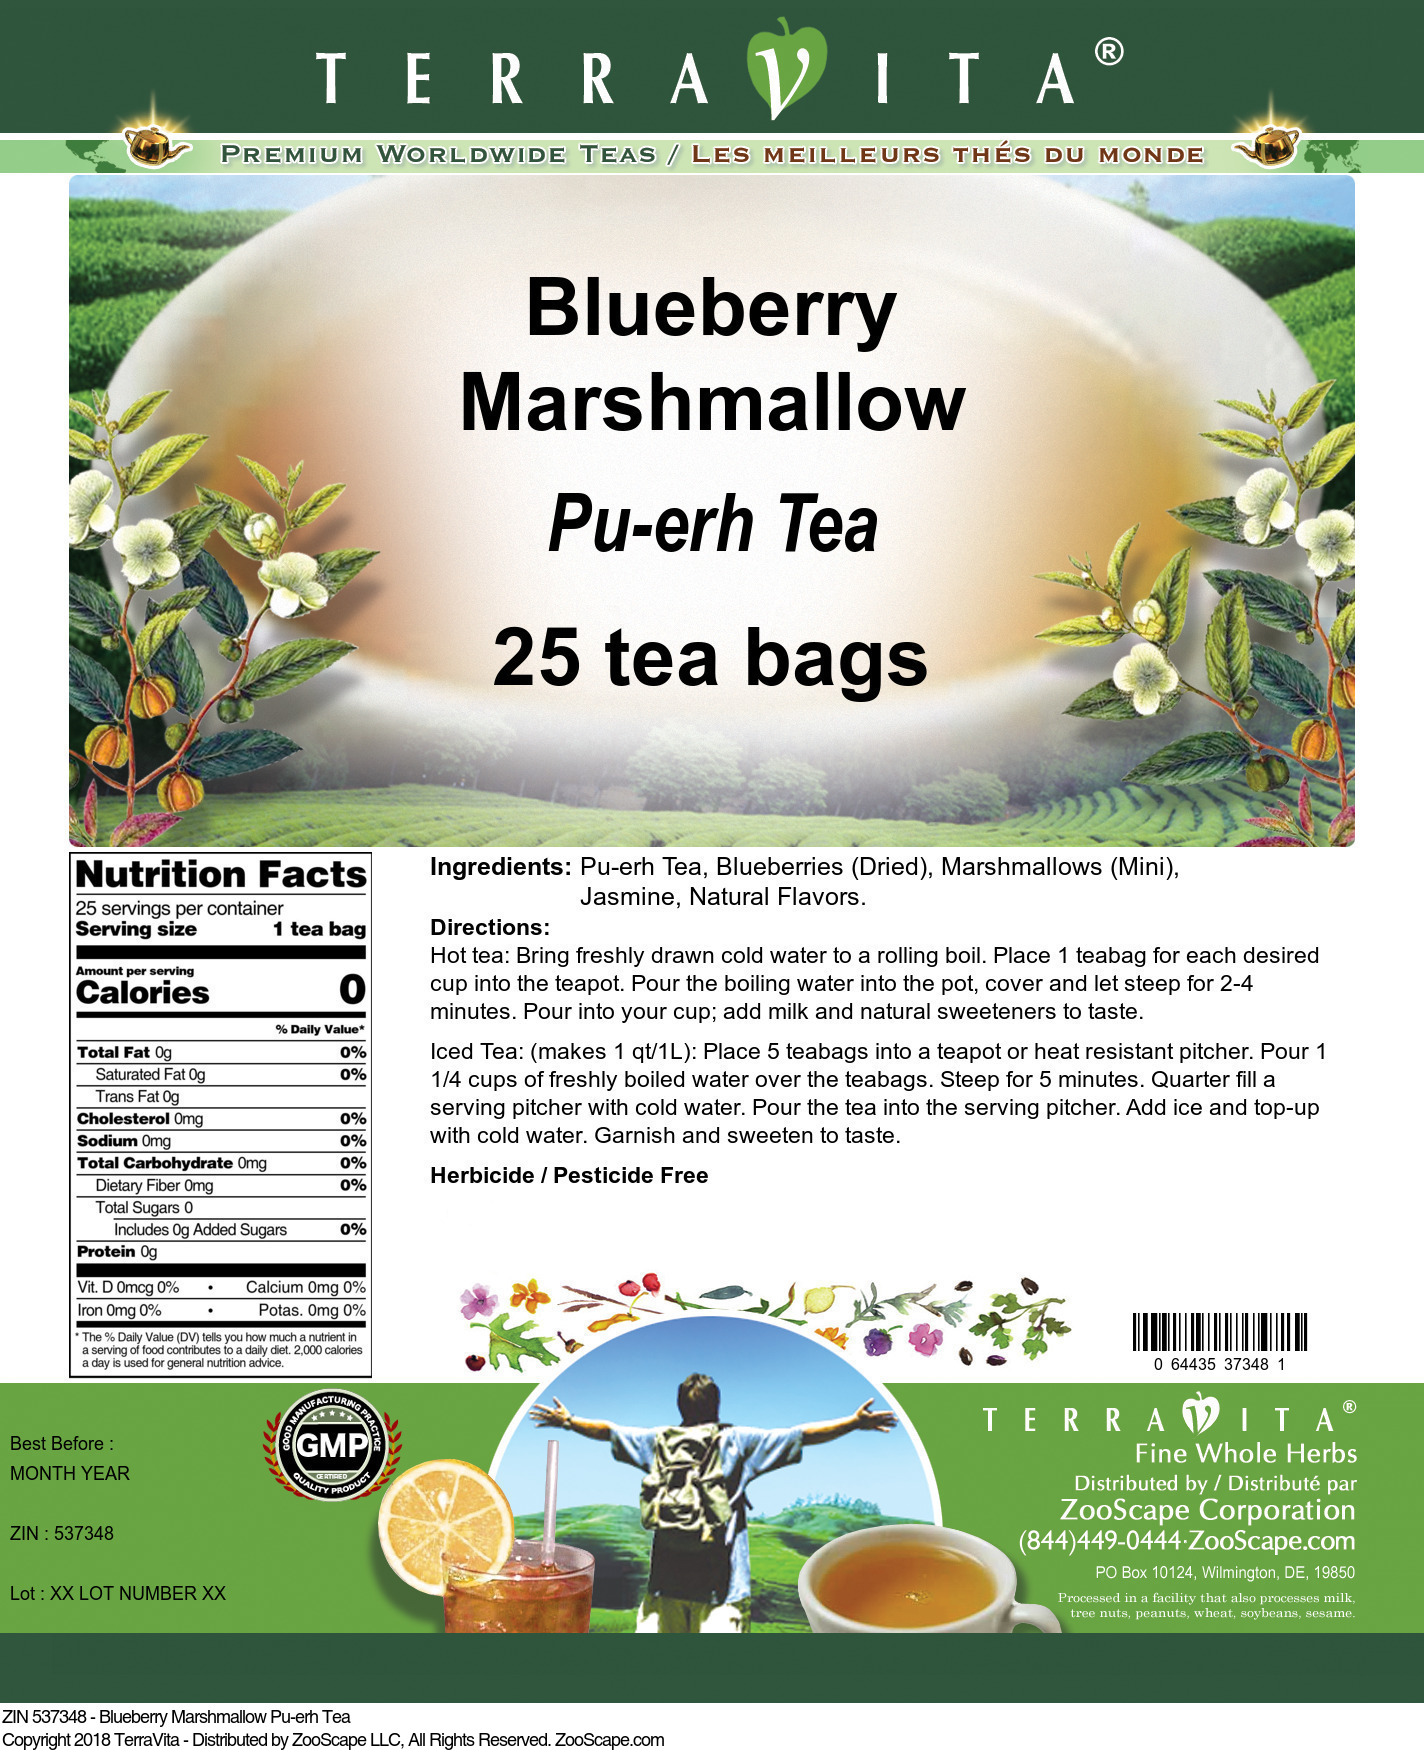 Blueberry Marshmallow Pu-erh Tea - Label